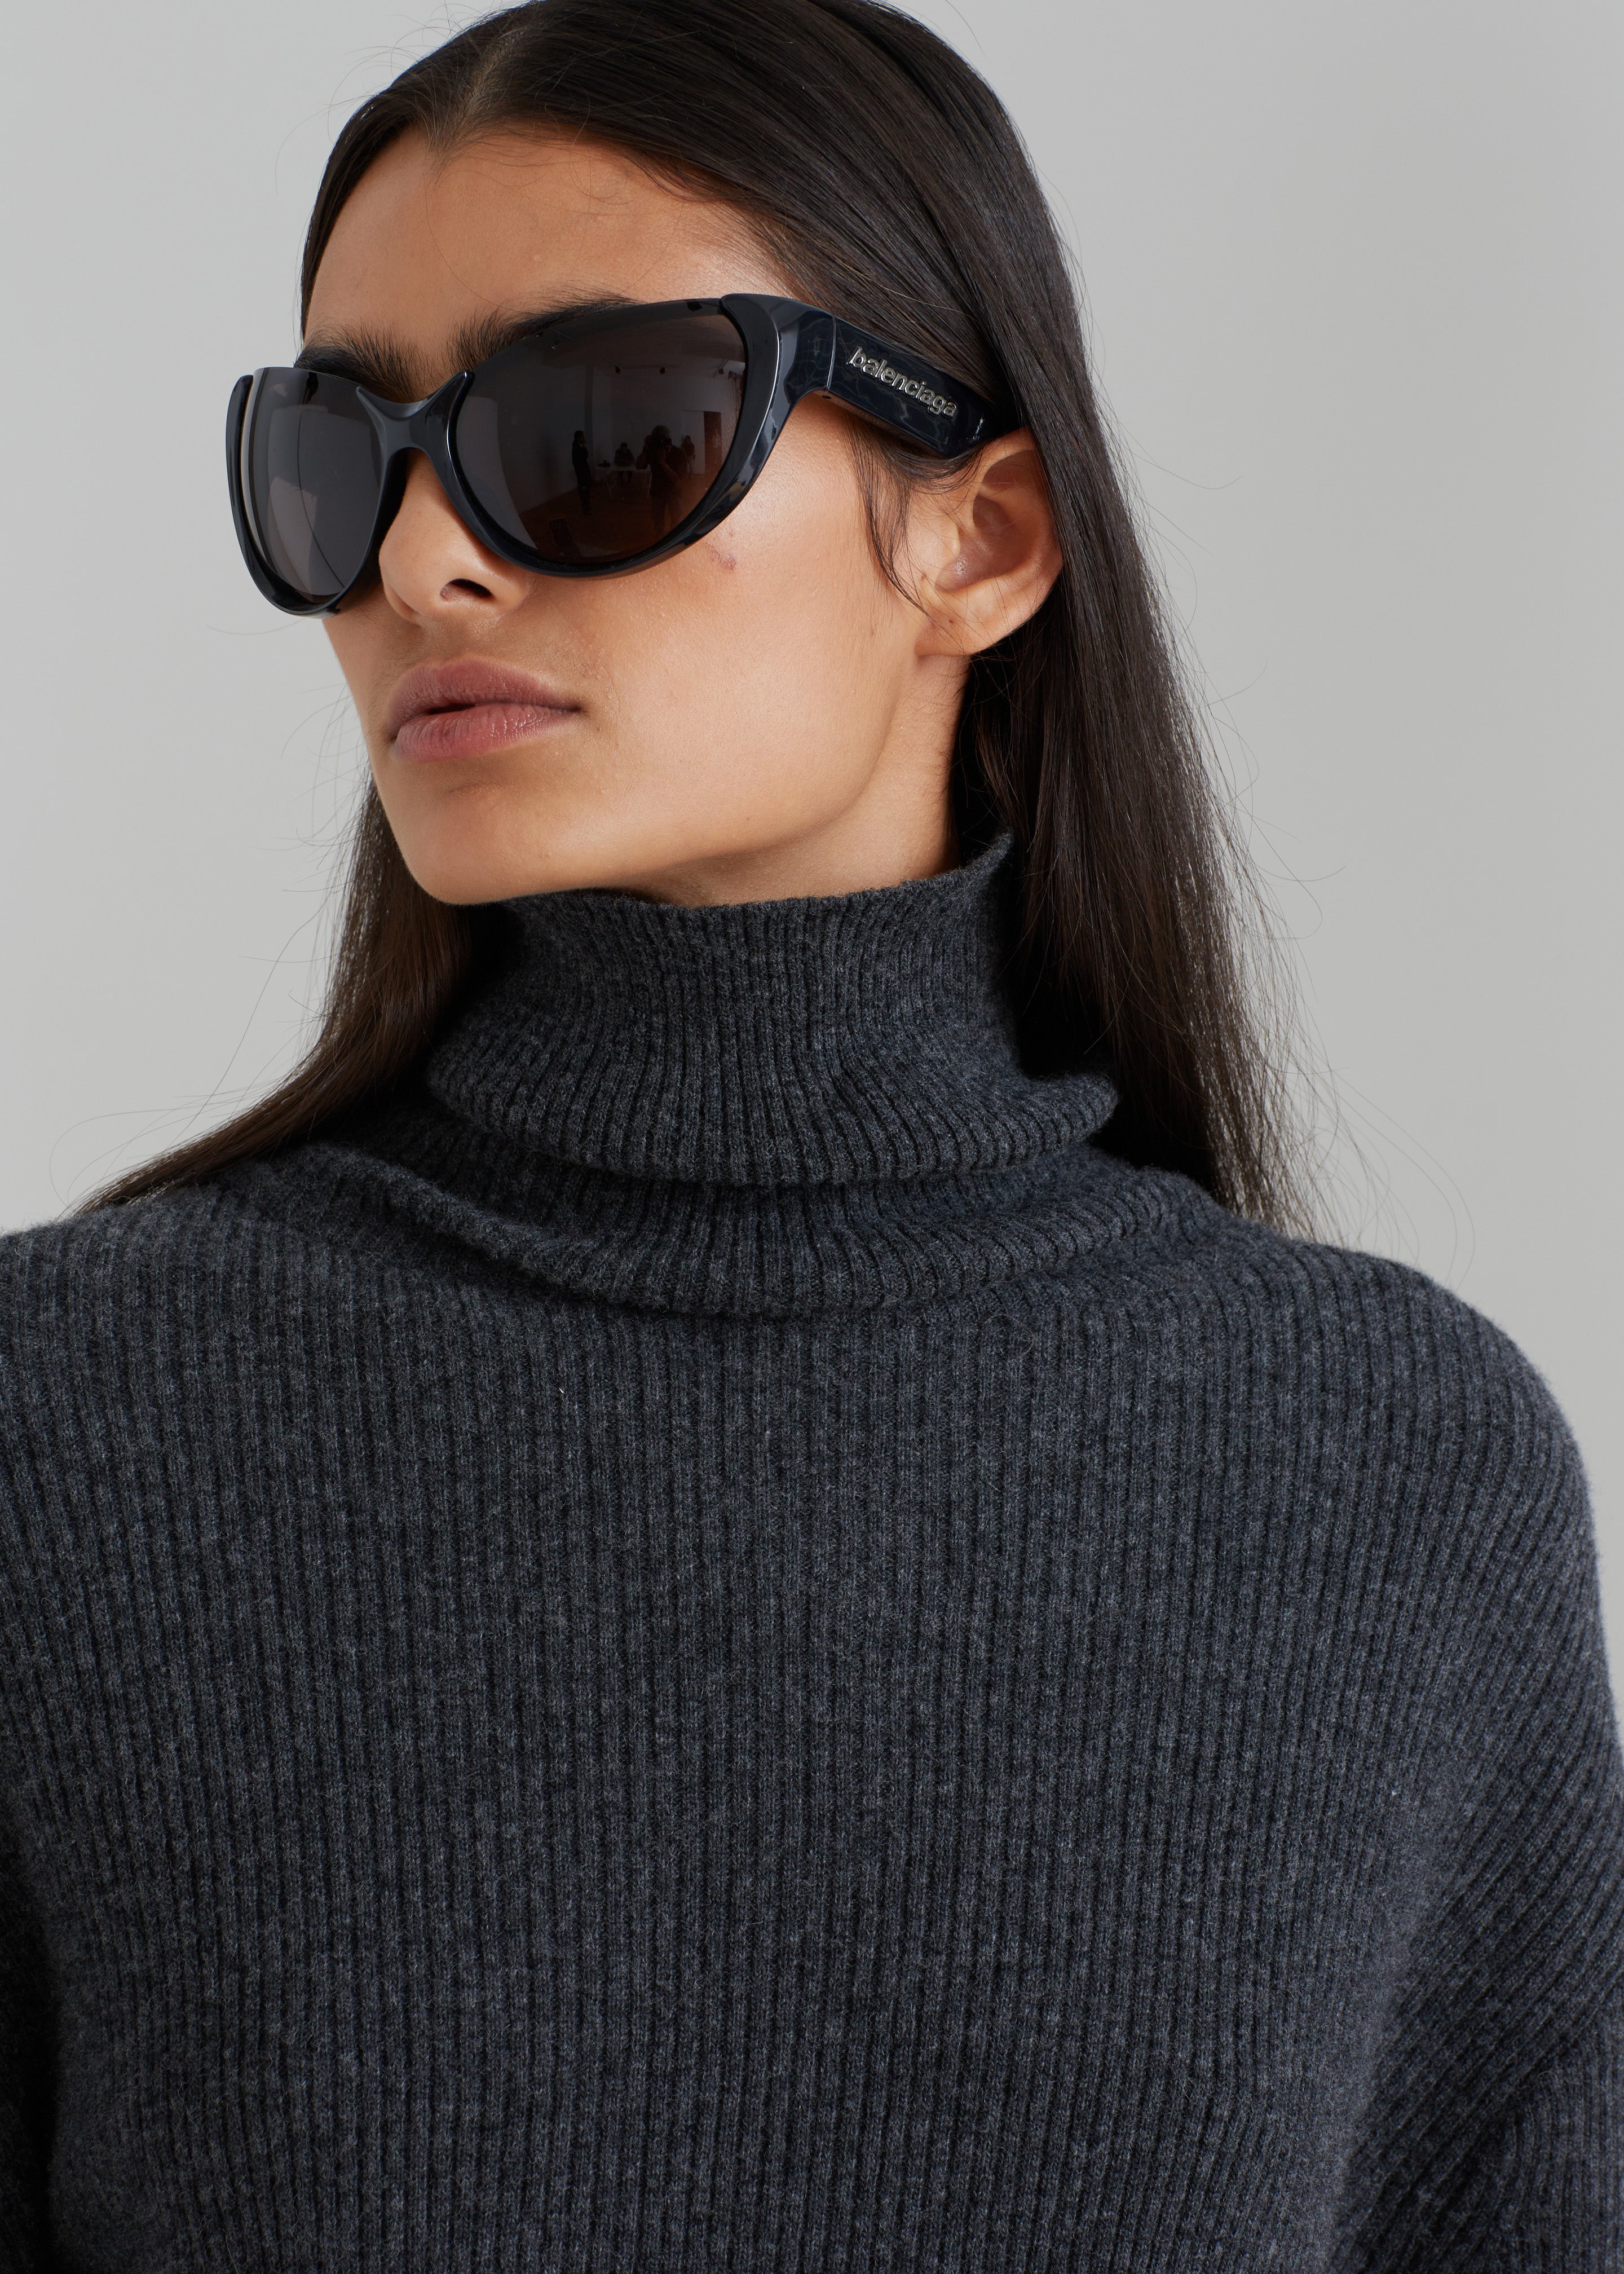 Women's Sweaters – The Frankie Shop